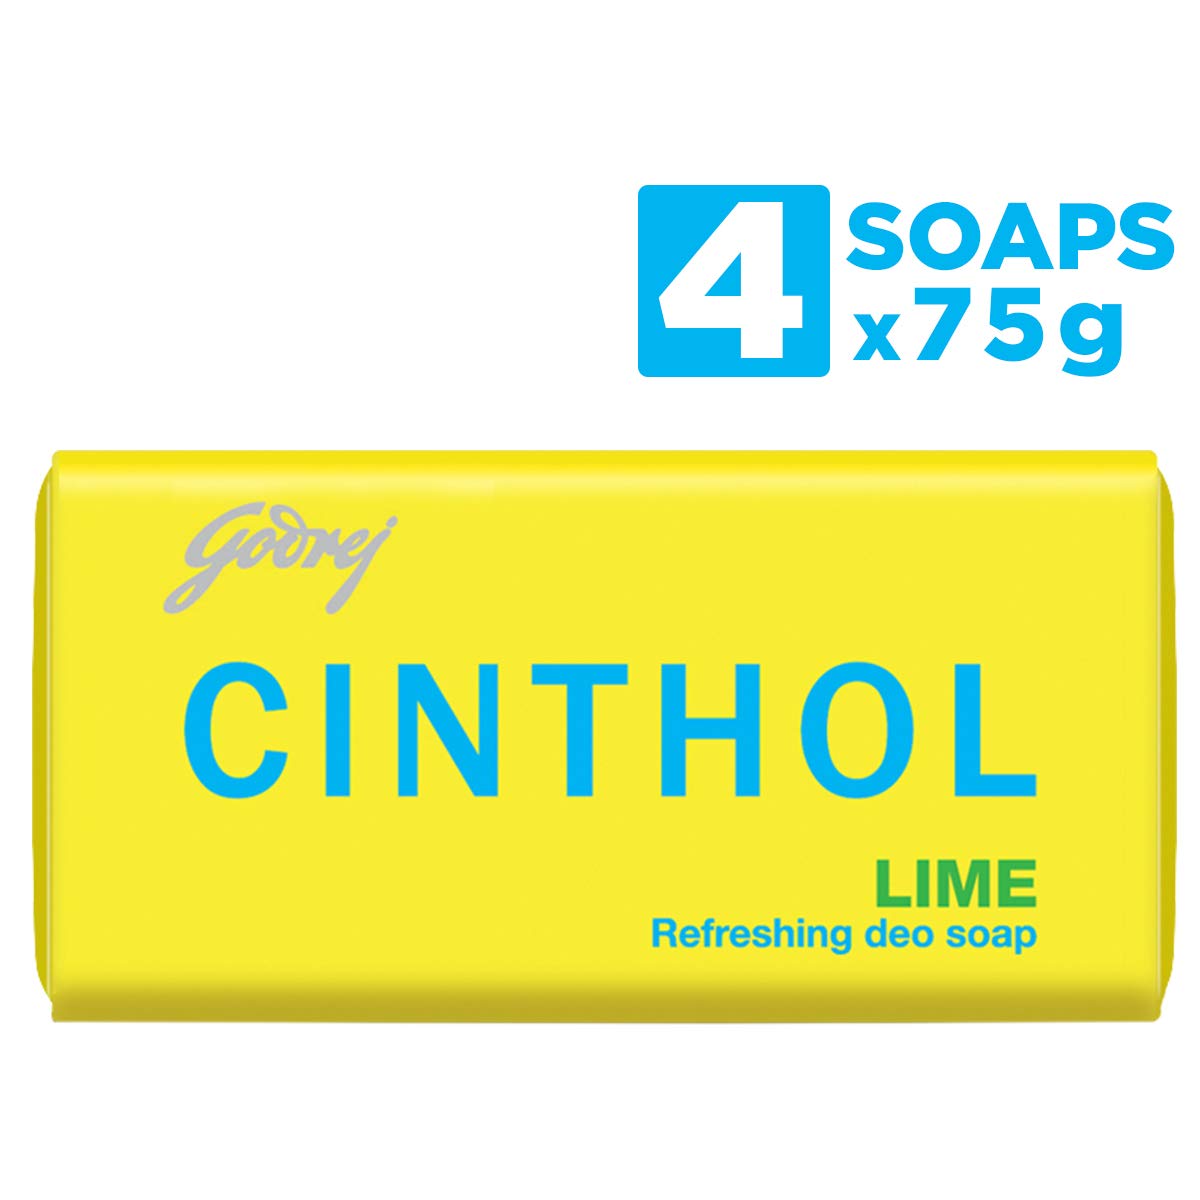 Cinthol Bath Soap, Lime, 75g (Pack of 4)